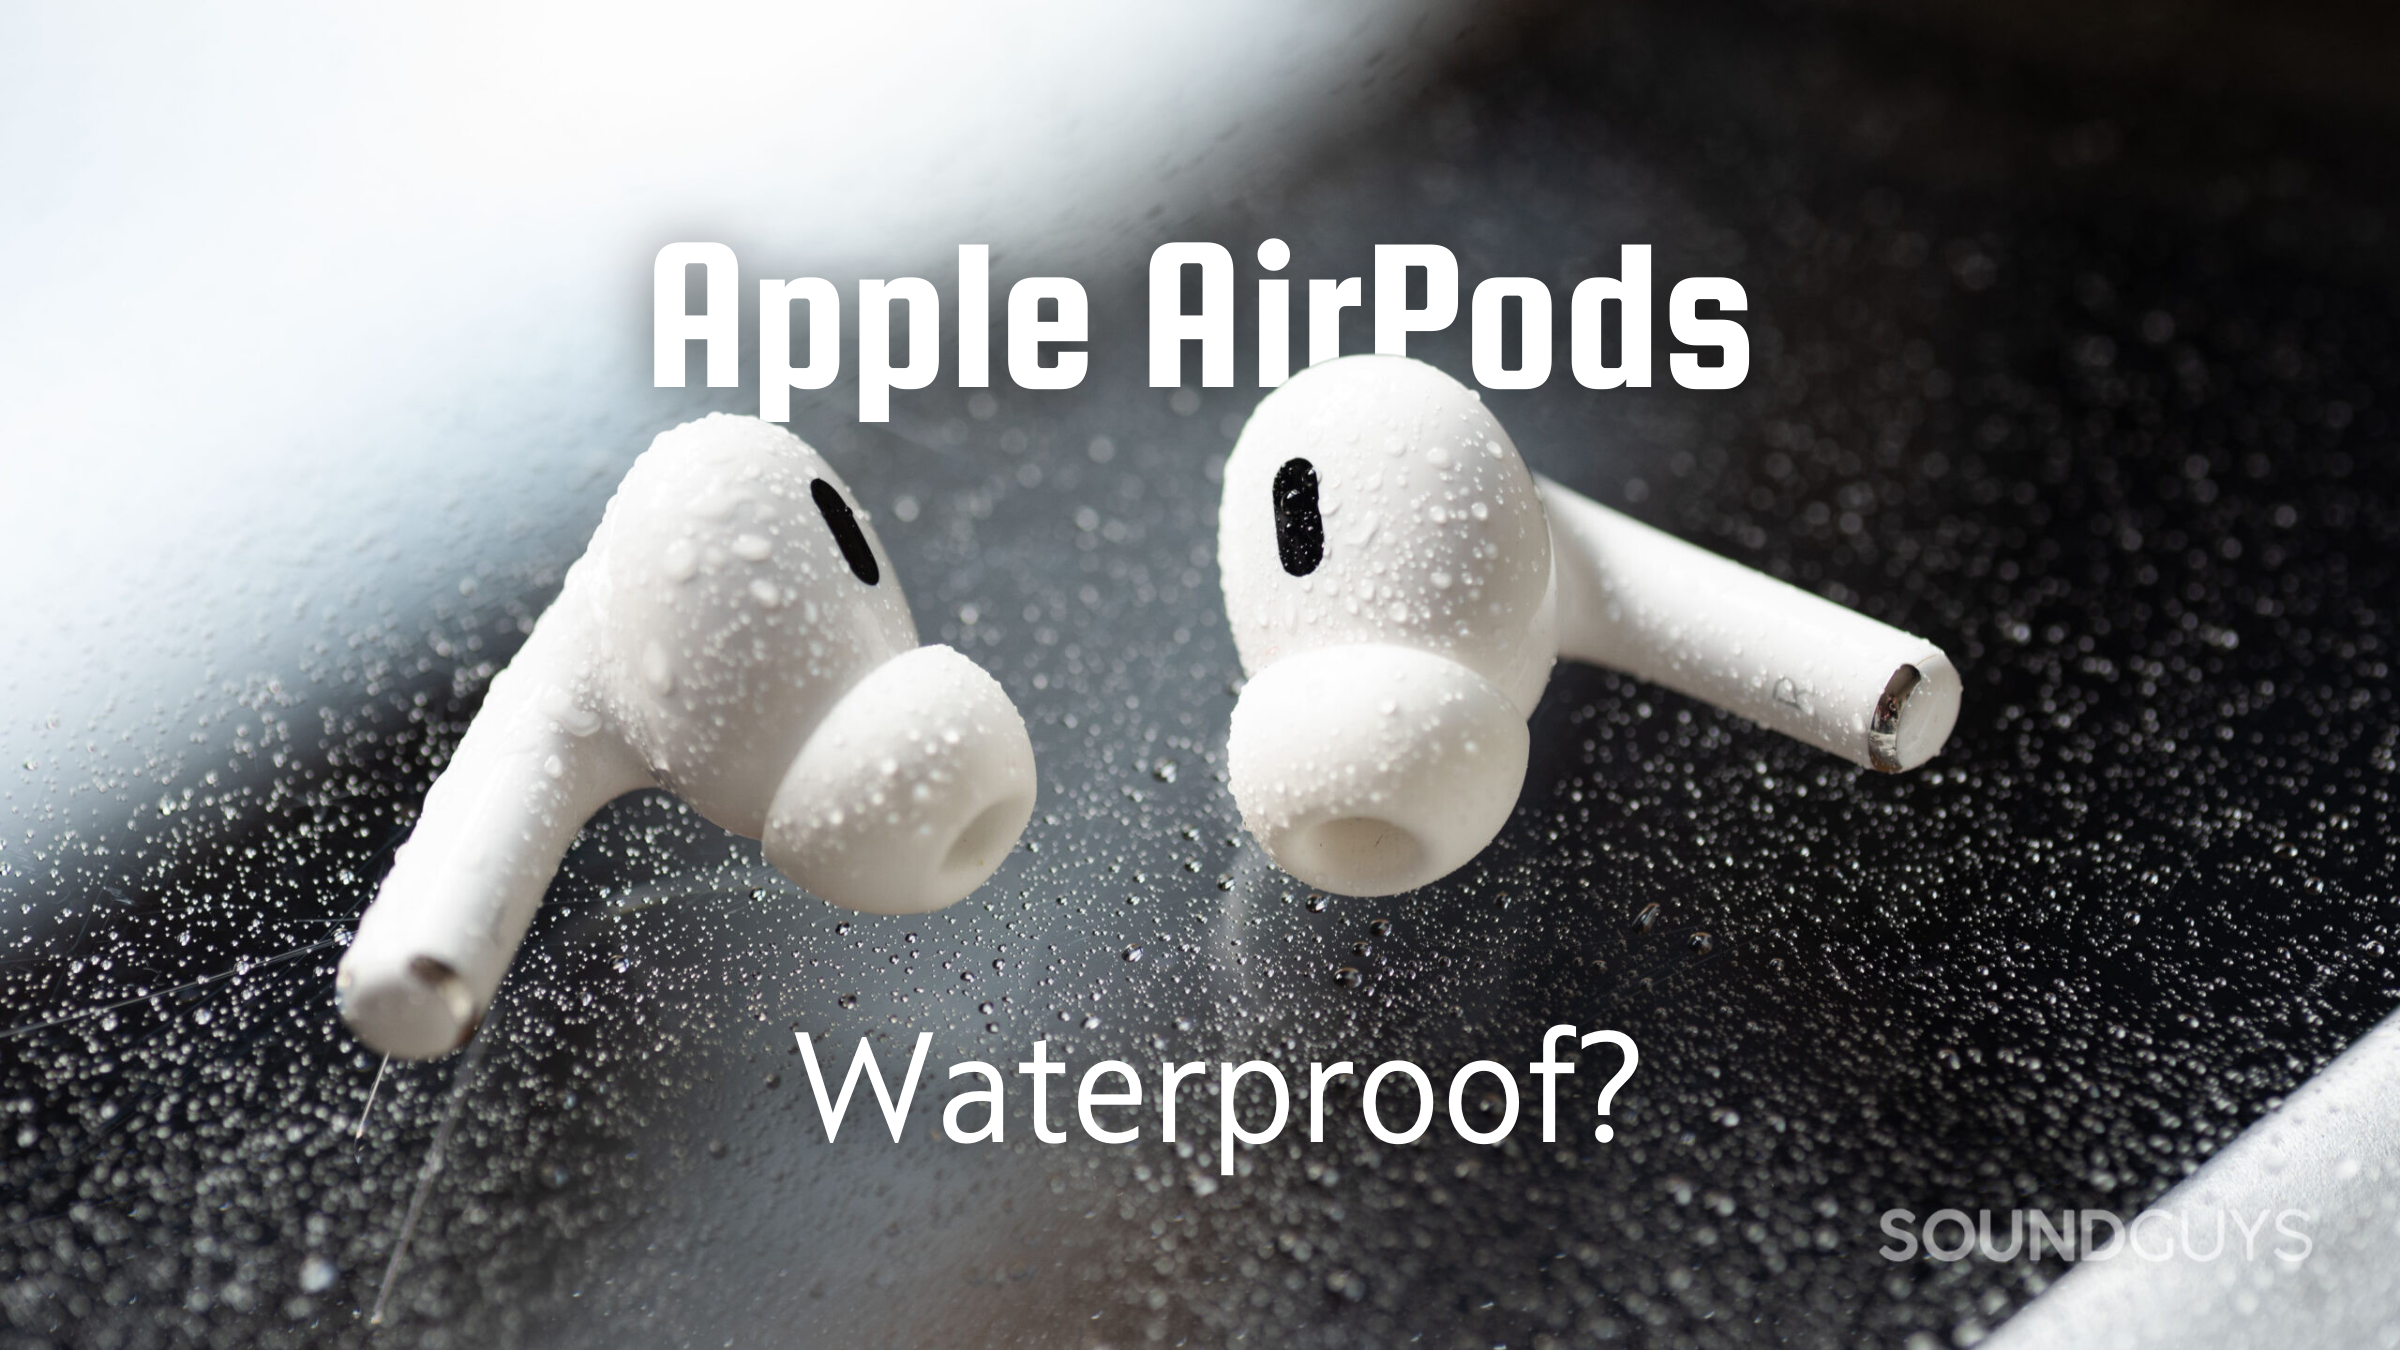 Are Apple AirPods waterproof